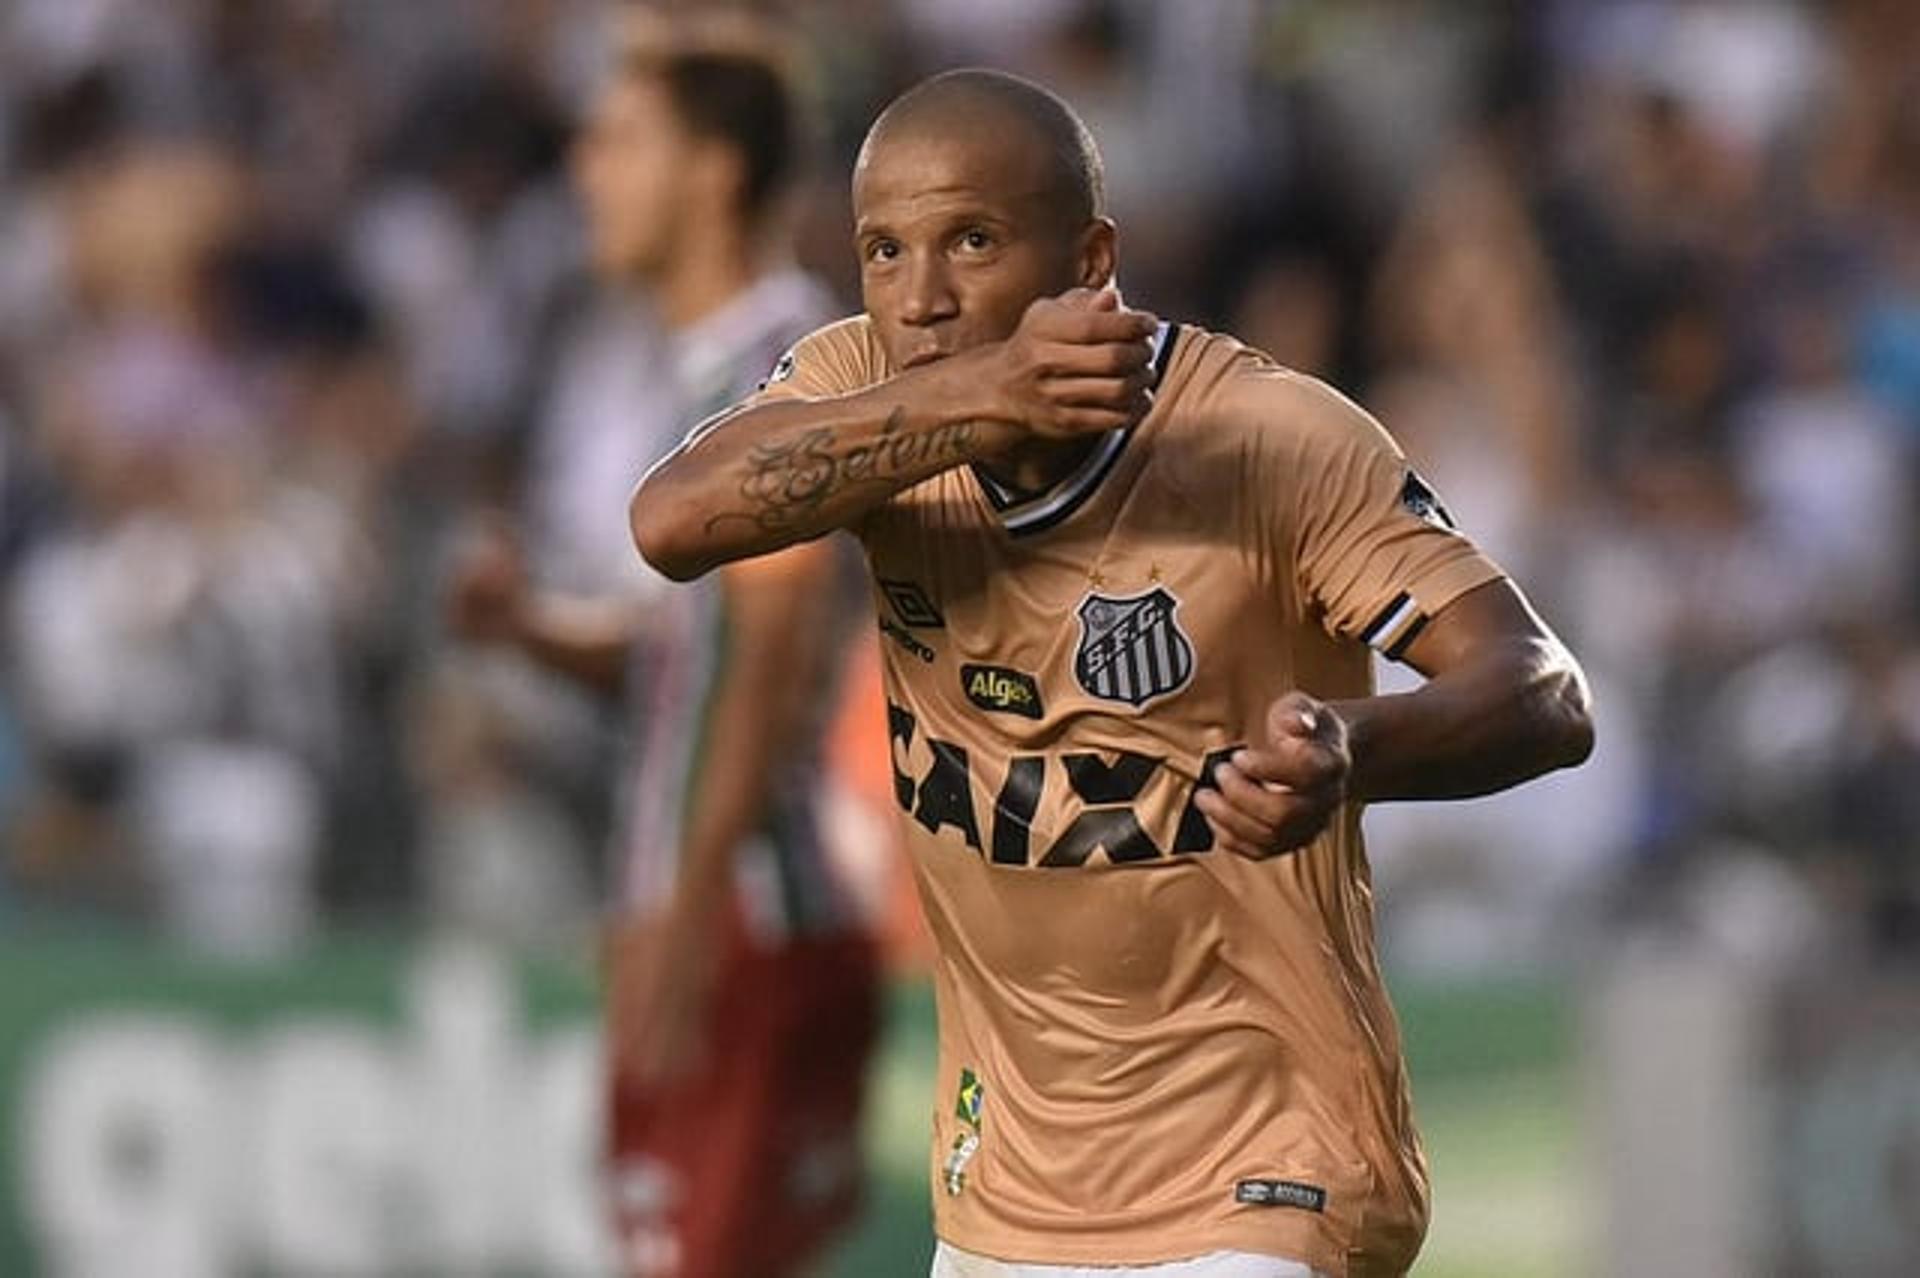 Com gols de Gabriel, Victor Ferraz e Carlos Sánchez, o Santos venceu o Fluminense, na Vila Belmiro, por 3 a 0